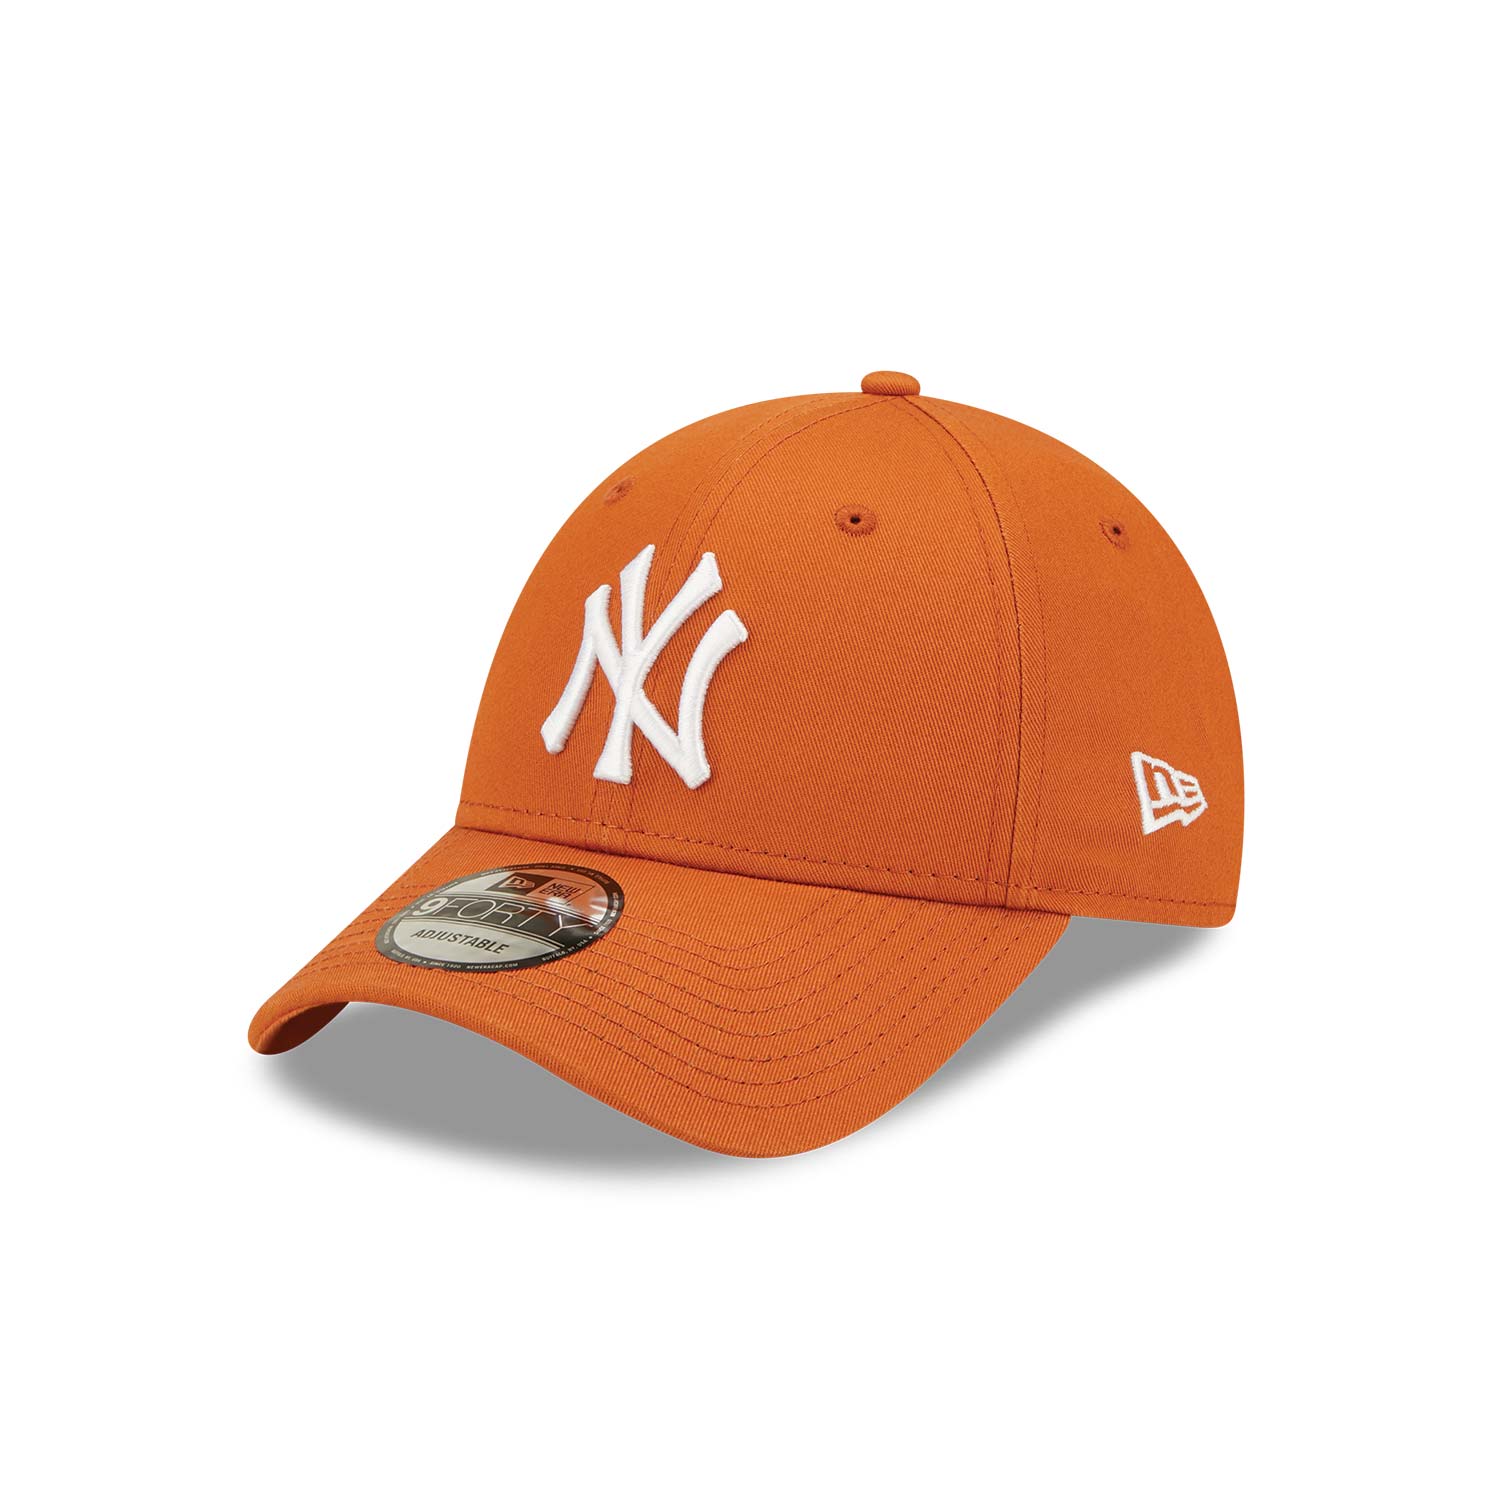 WOMEN FASHION Accessories Hat and cap Orange discount 92% Orange Single Women'secret hat and cap 